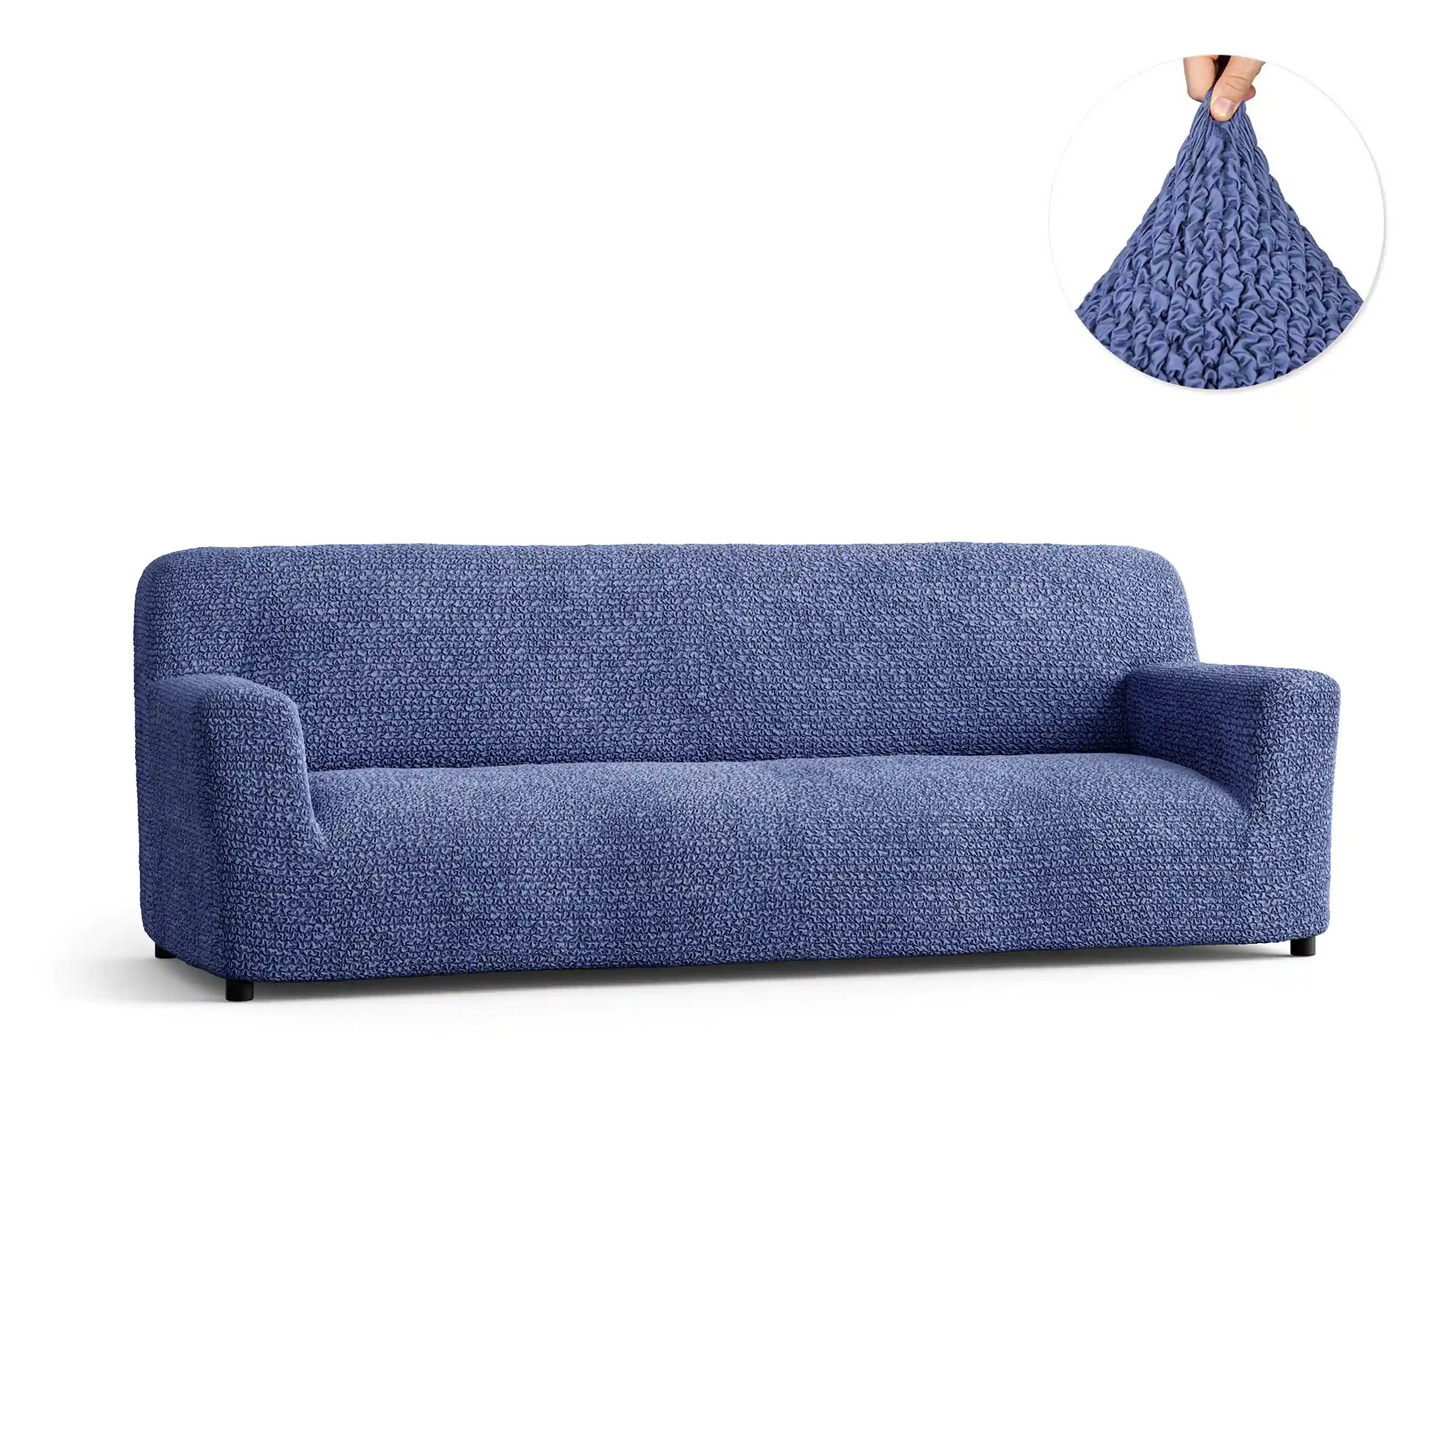 4 Seater Sofa Cover - Blue, Microfibra Collection